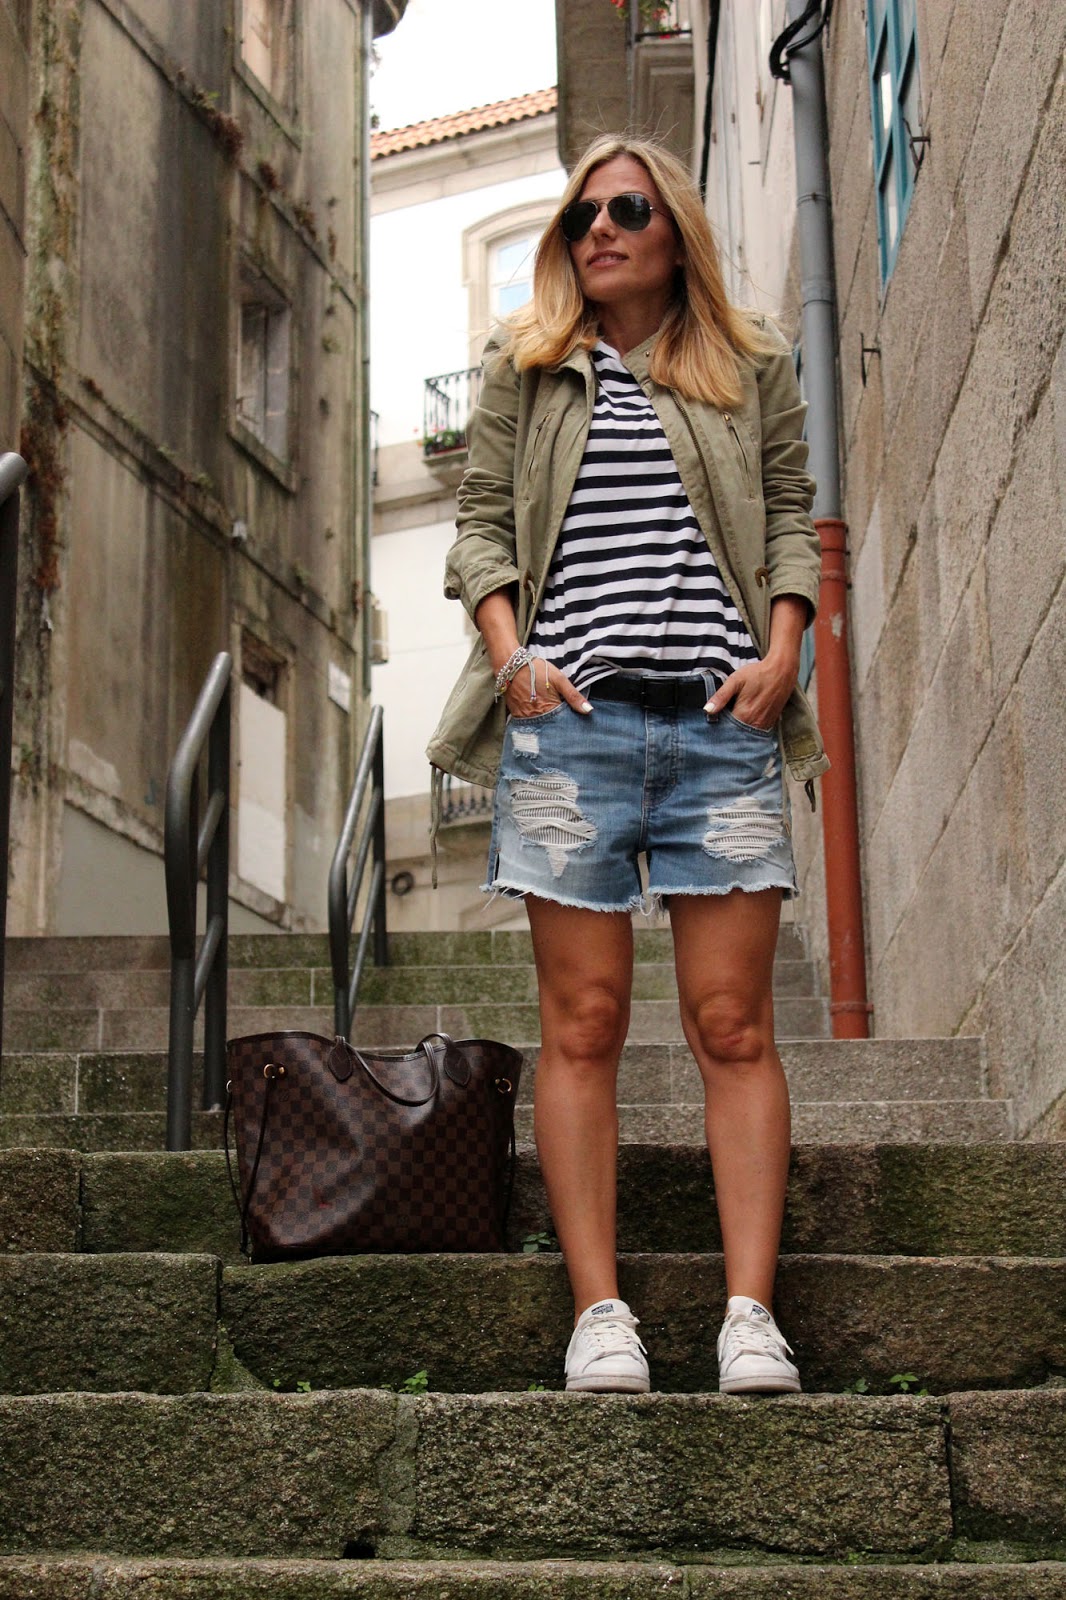 Eniwhere Fashion - Denim Shorts and Stripes shirt in Vigo